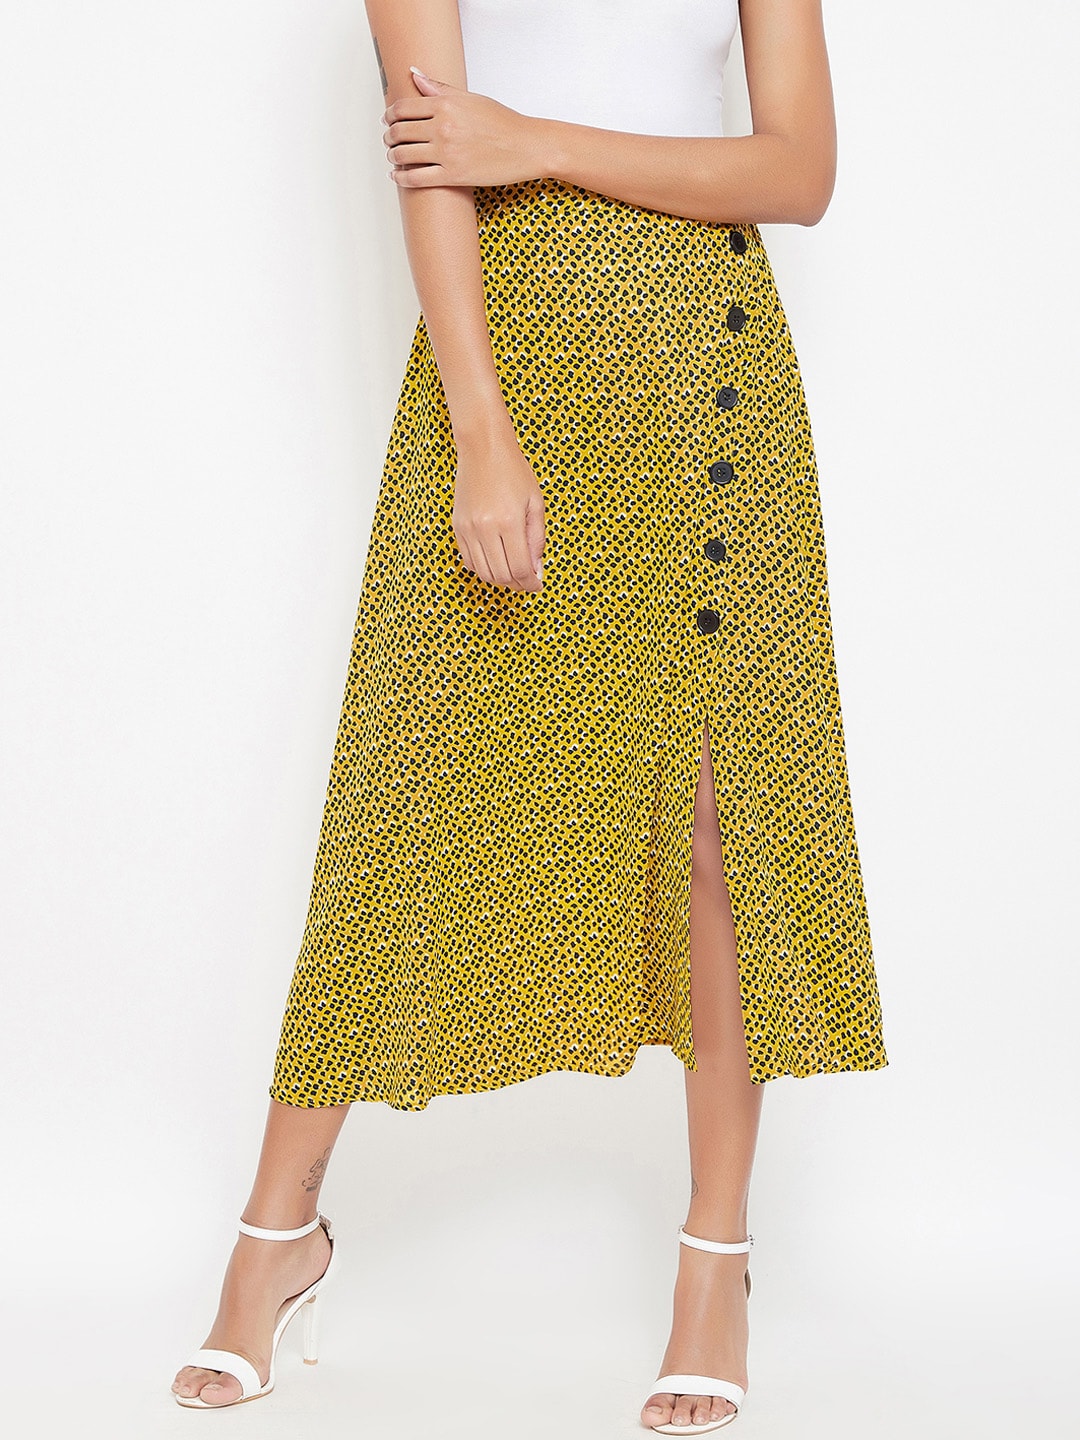 Berrylush Yellow & Black Printed A-Line Midi Skirt Price in India